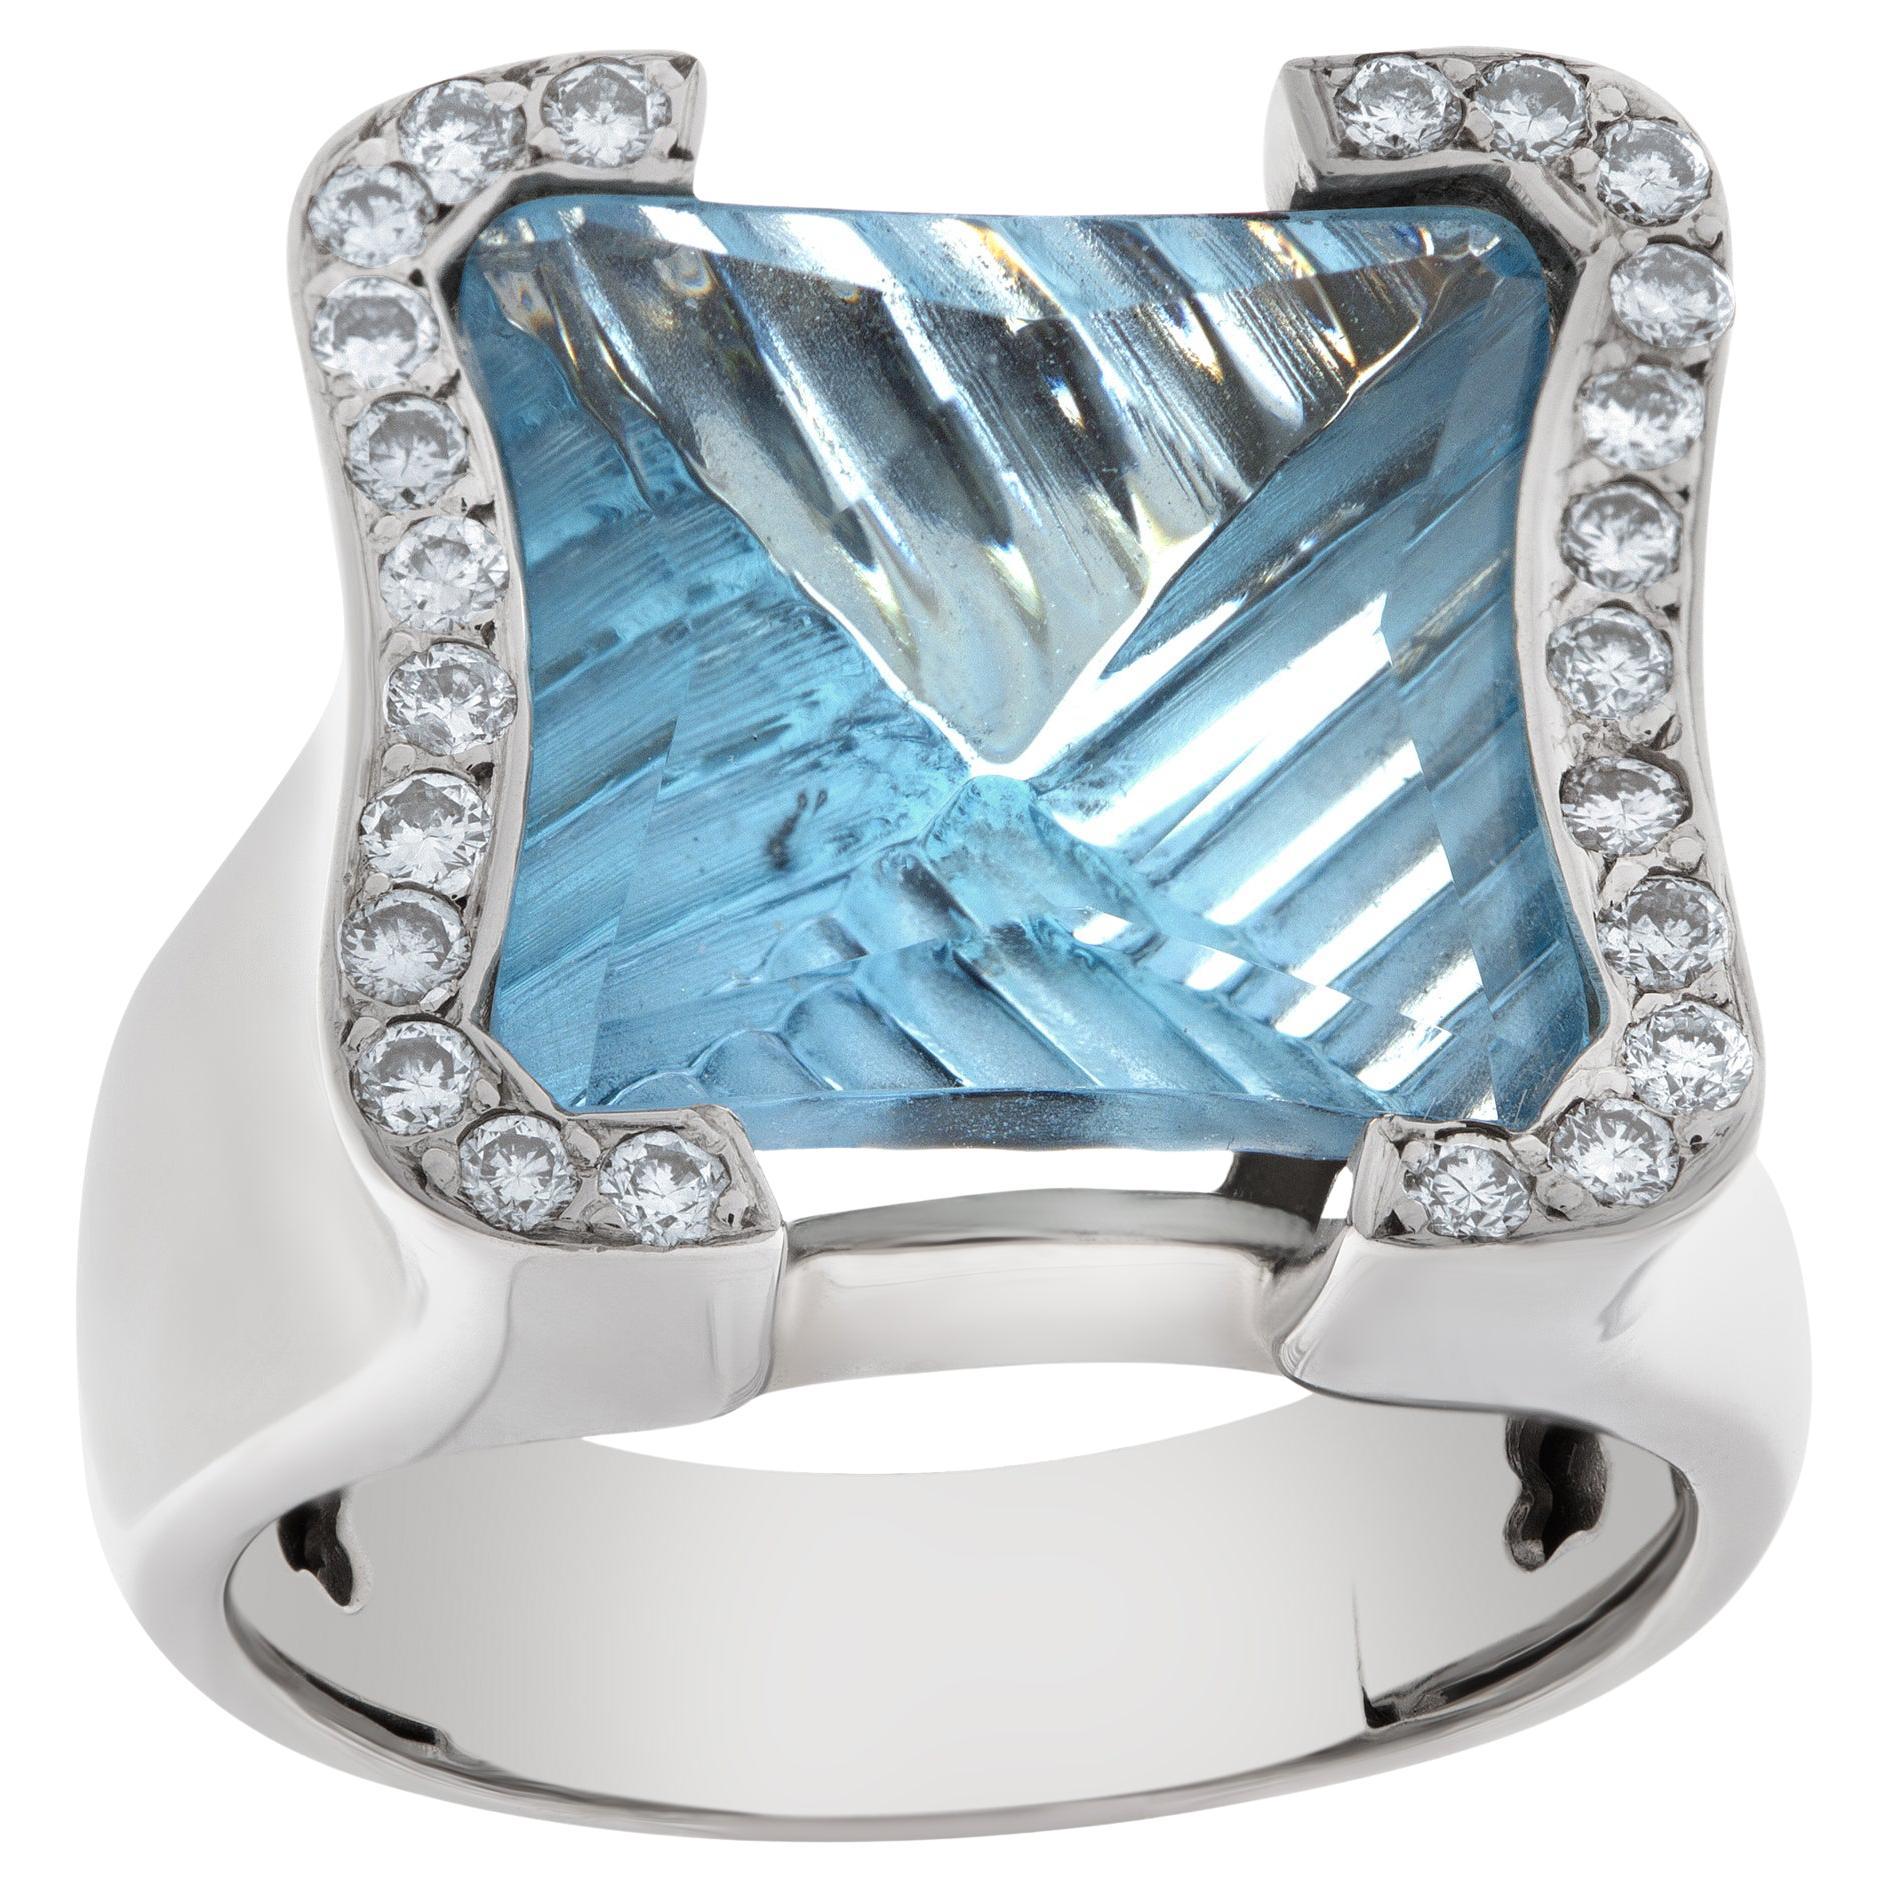 Blue Topaz and Diamond Ring in 18k White Gold